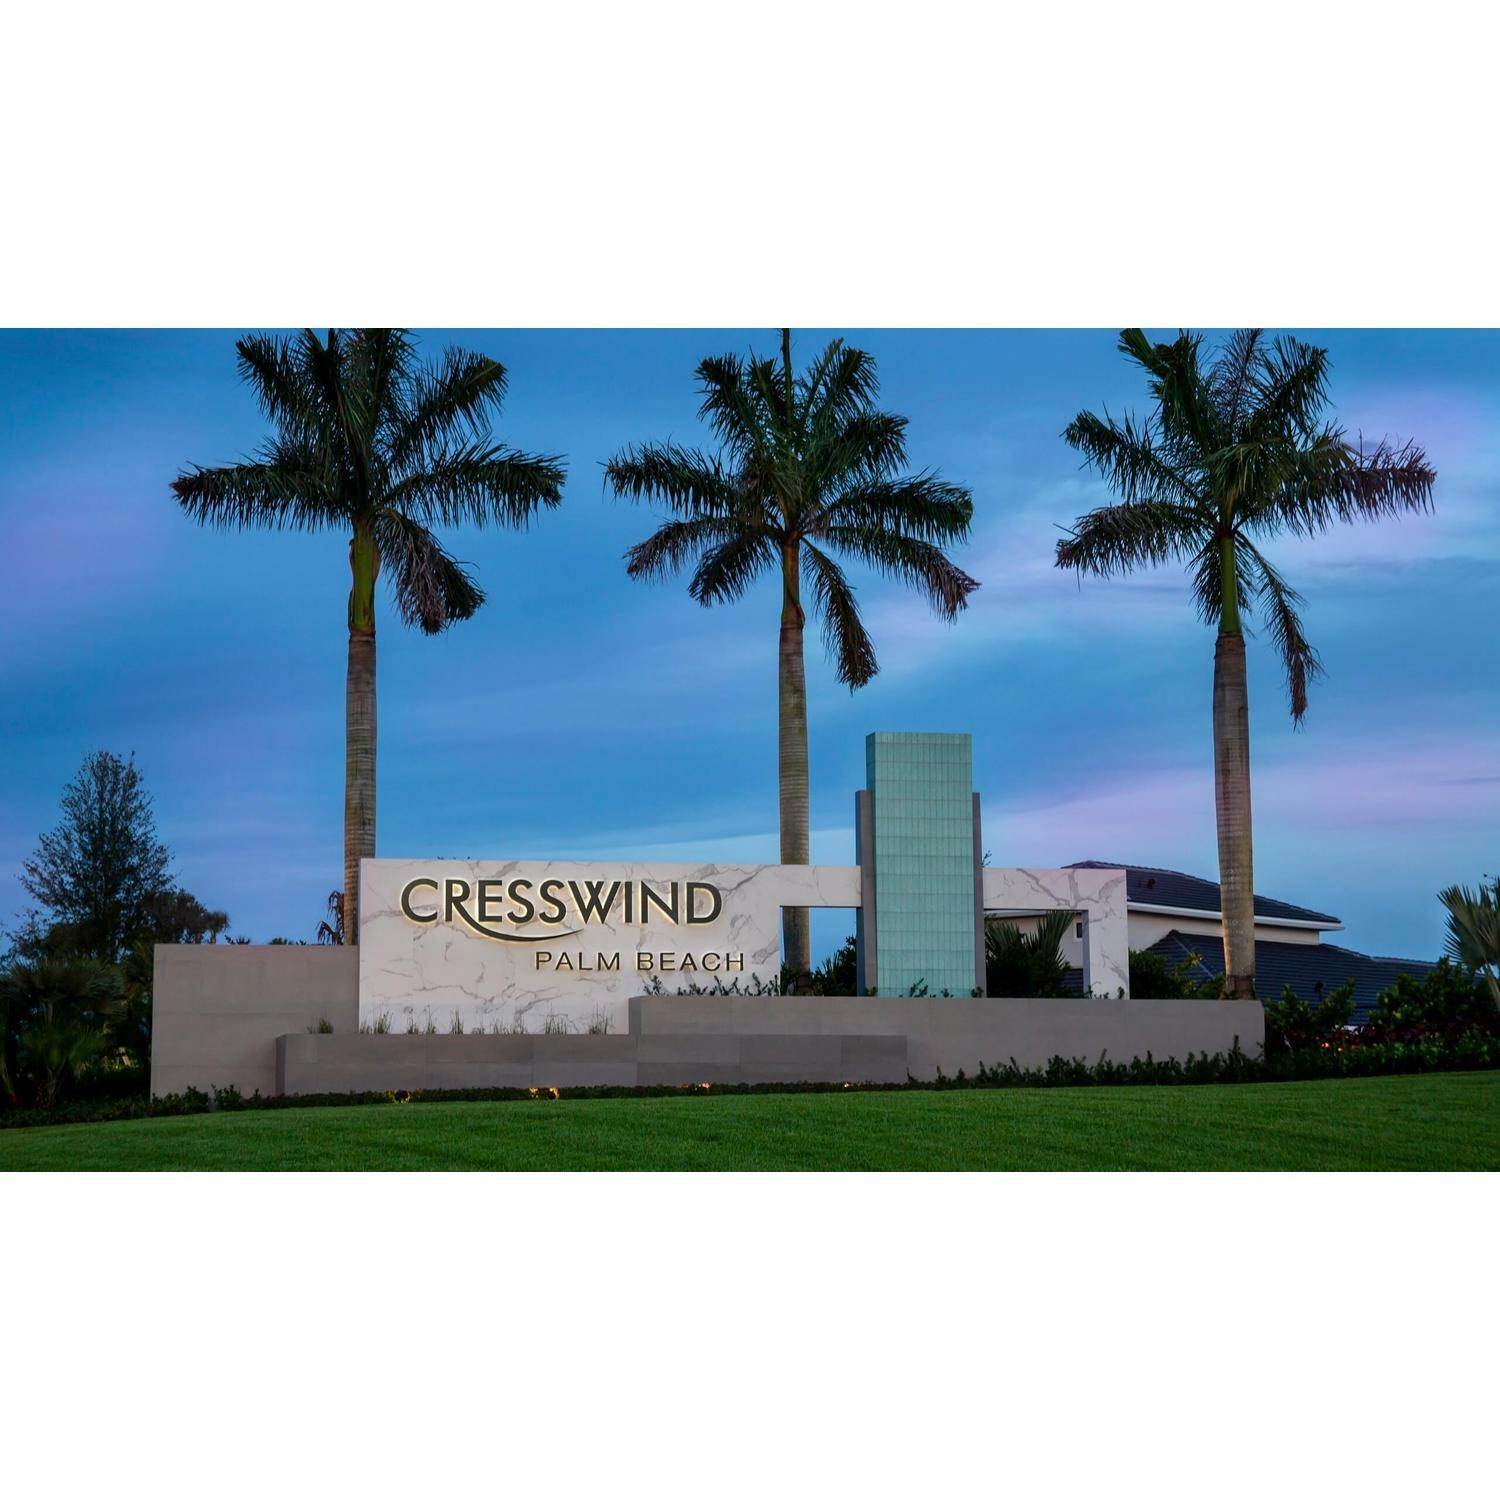 2. Cresswind Palm Beach建于 5287 Siesta Key Lane, Westlake, FL 33470